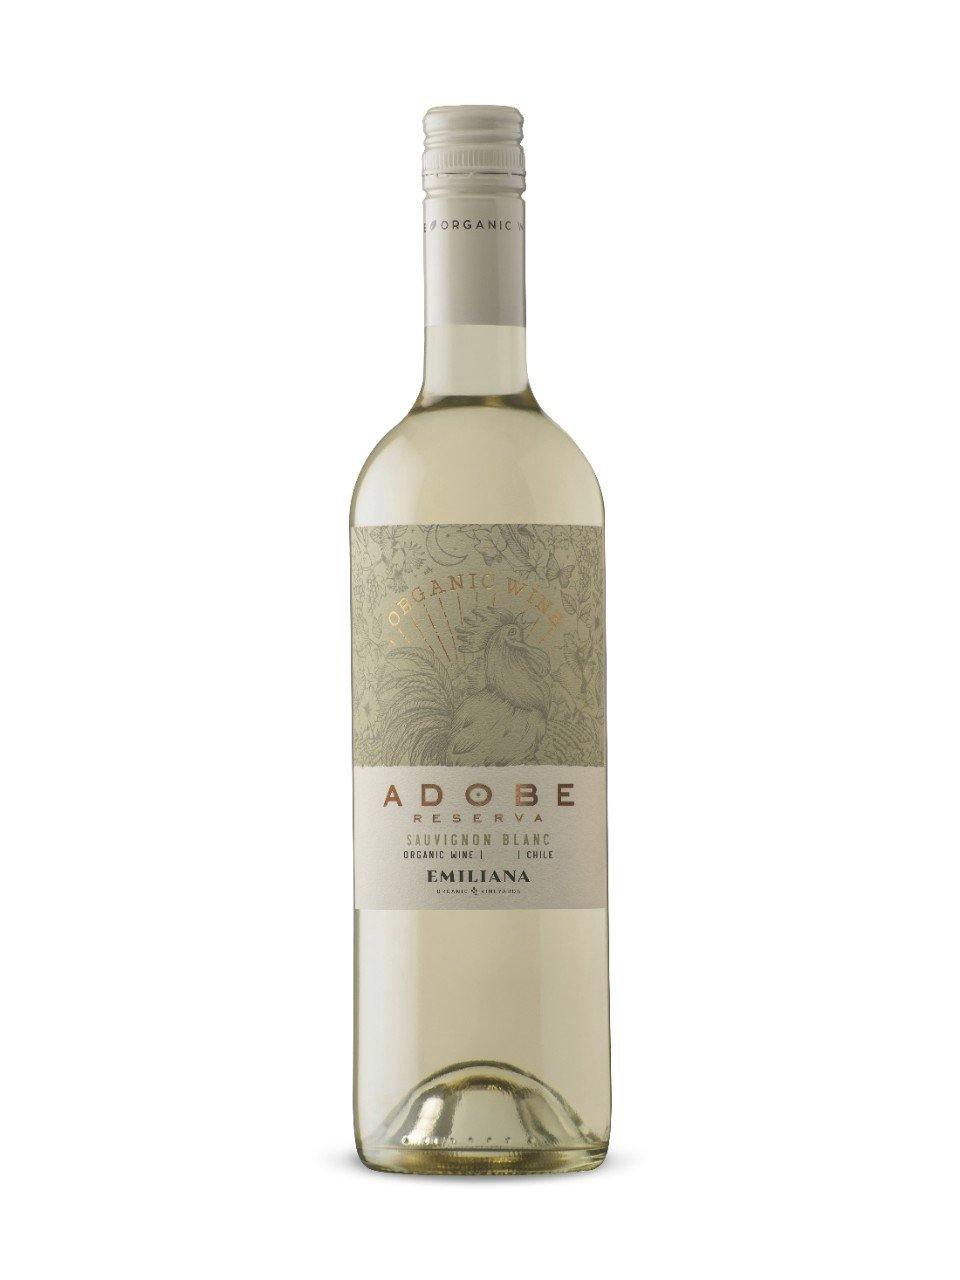 Adobe Reserva Sauvignon Blanc Organic 750 mL bottle - Speedy Booze